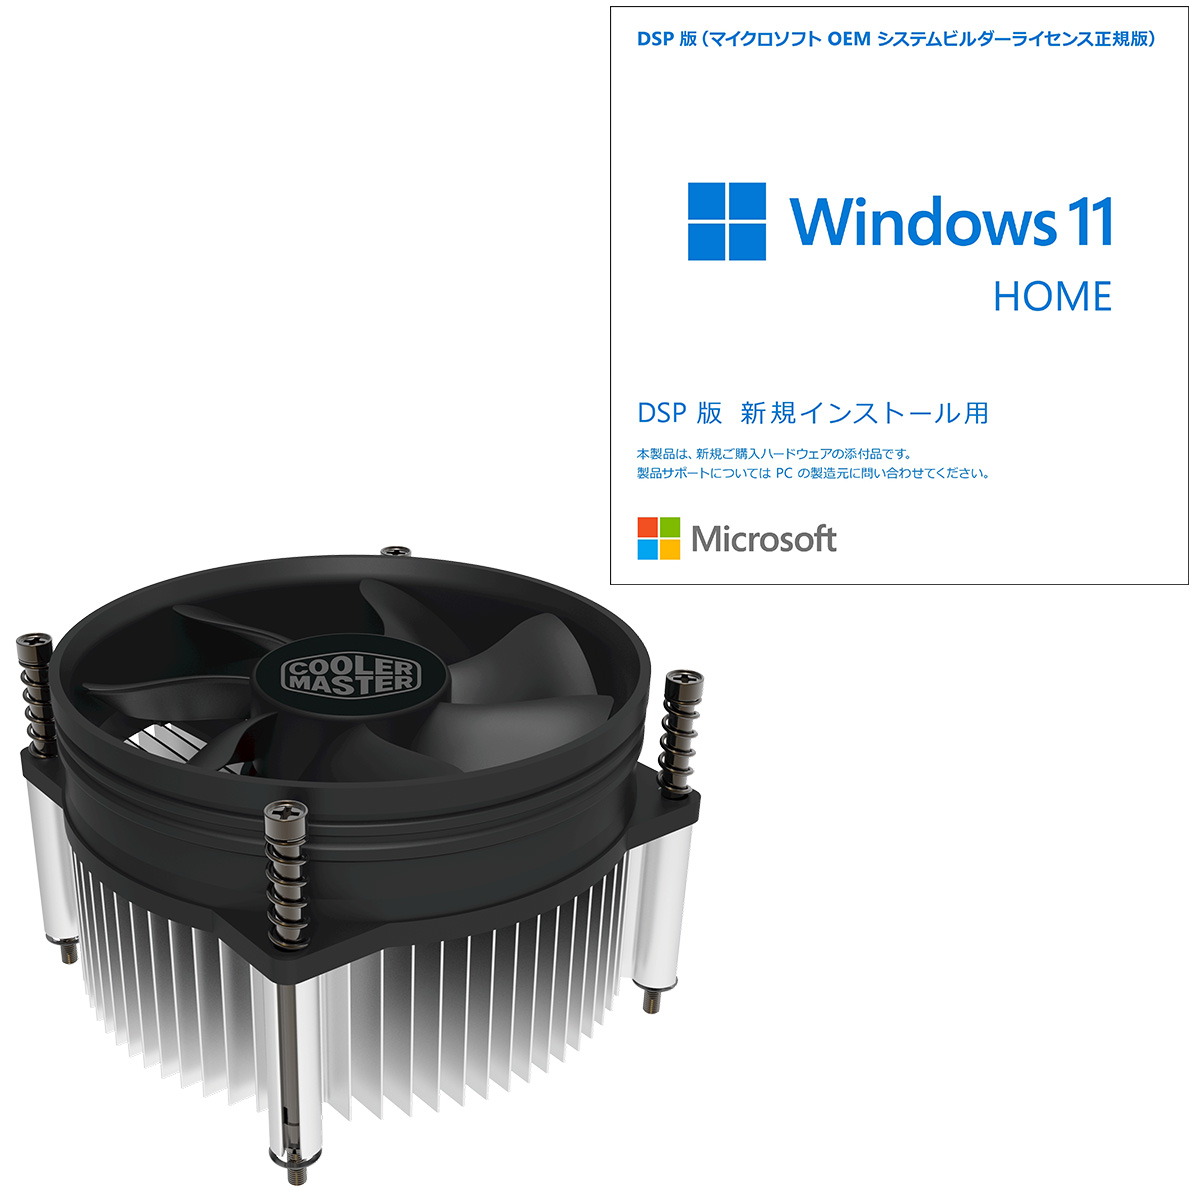 Microsoft Windows 11 home 64bit 日本語版 DSP DVD CPUクーラーセット KW9-00643 NP